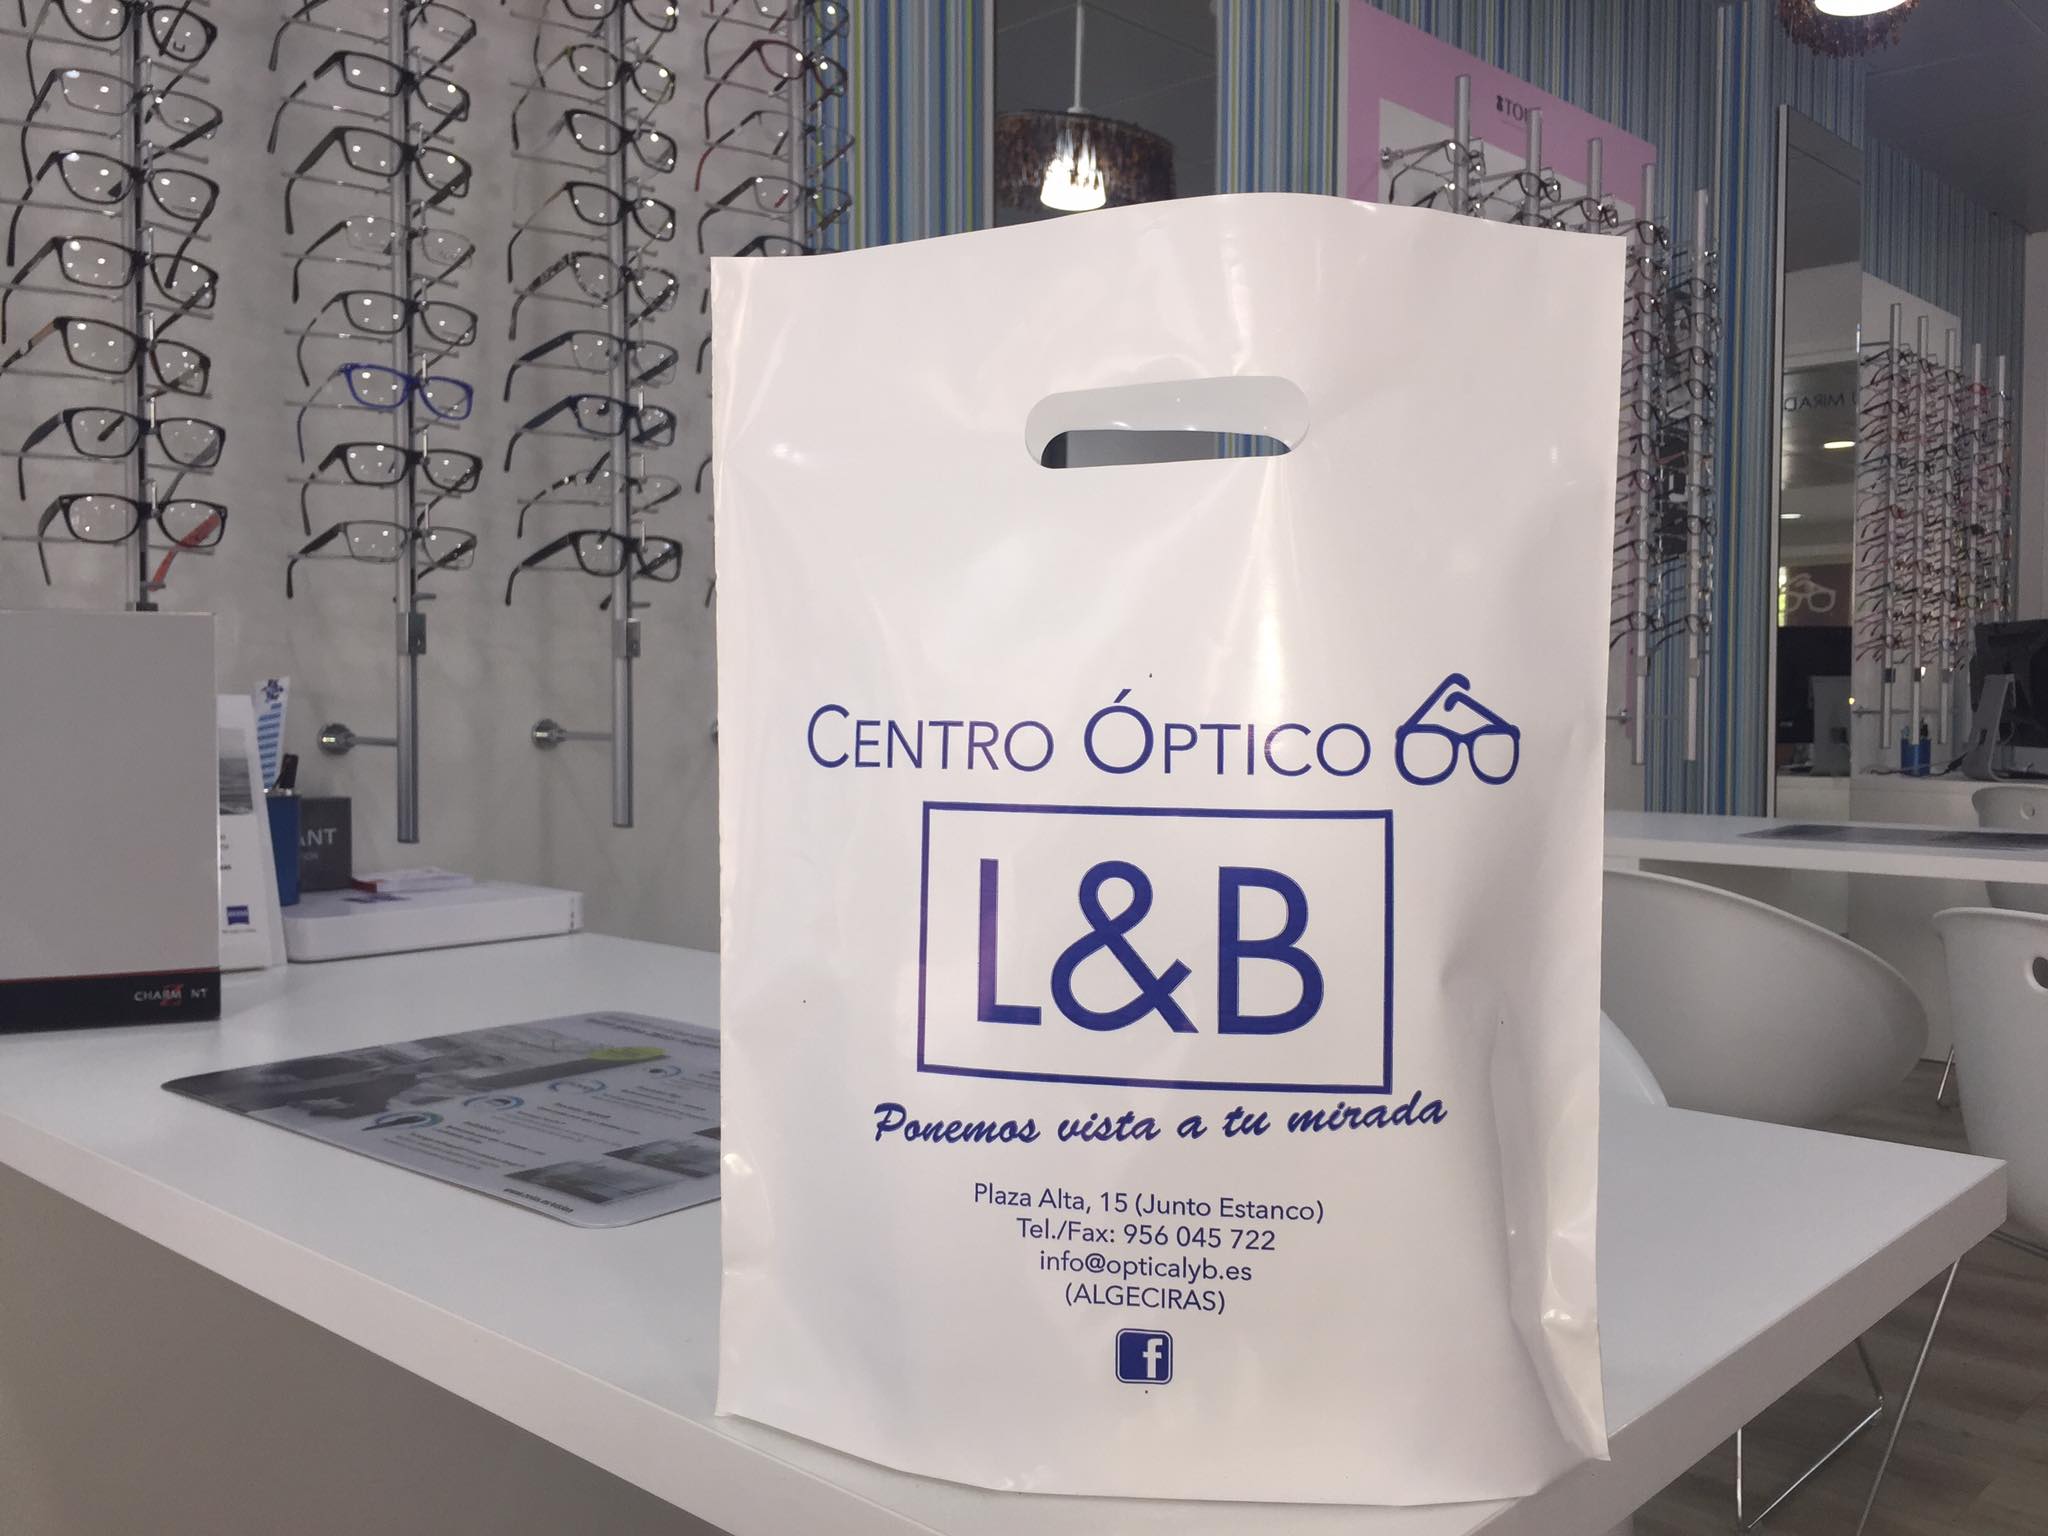 Centro Óptico L&B - Bolsas Arana. Bolsas impresas papel, tela, plástico reciclado, reutilizables ,biodegradable y